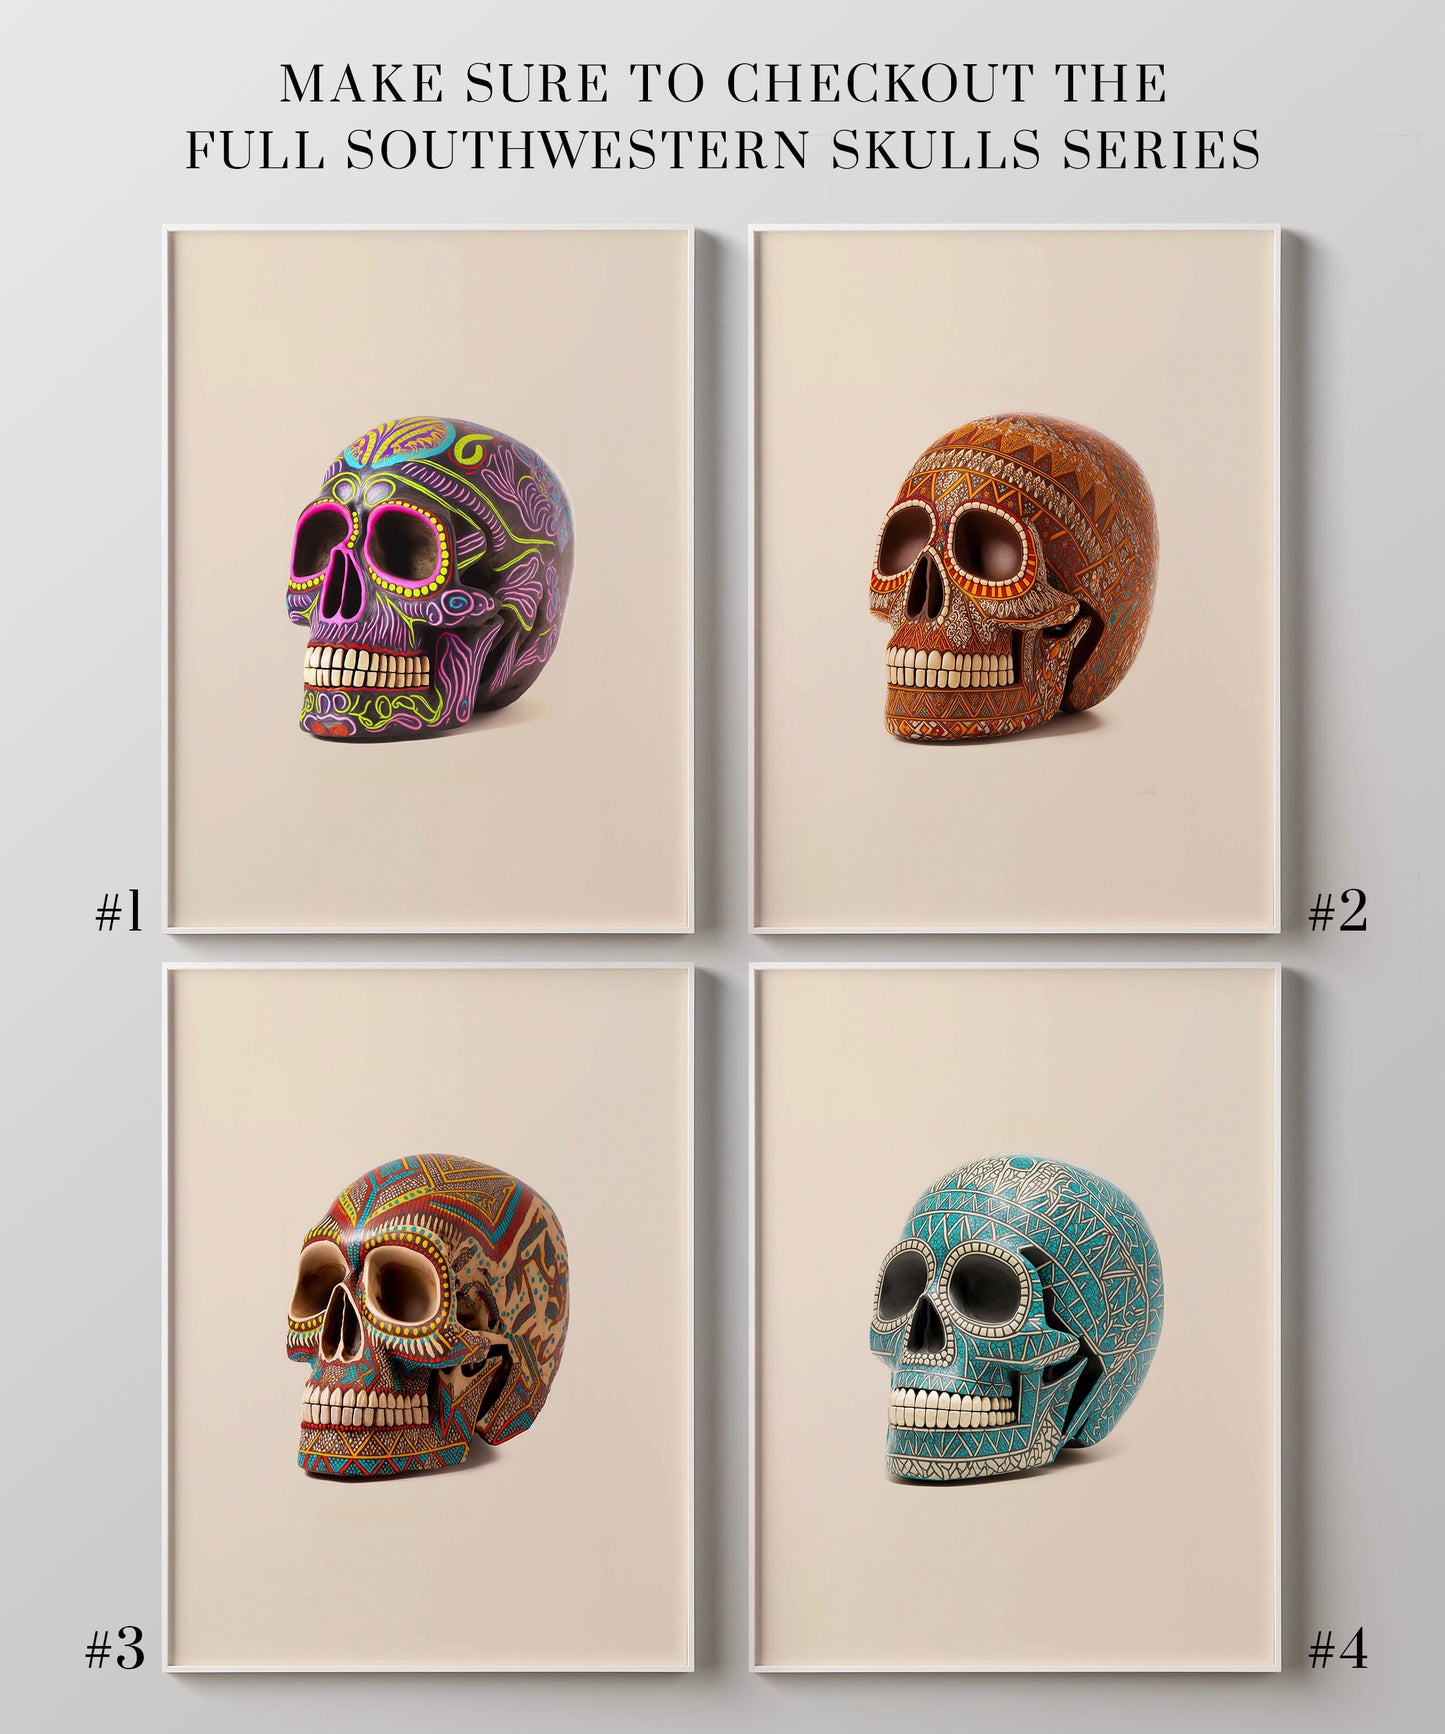 Southwestern Skulls #5 of 5